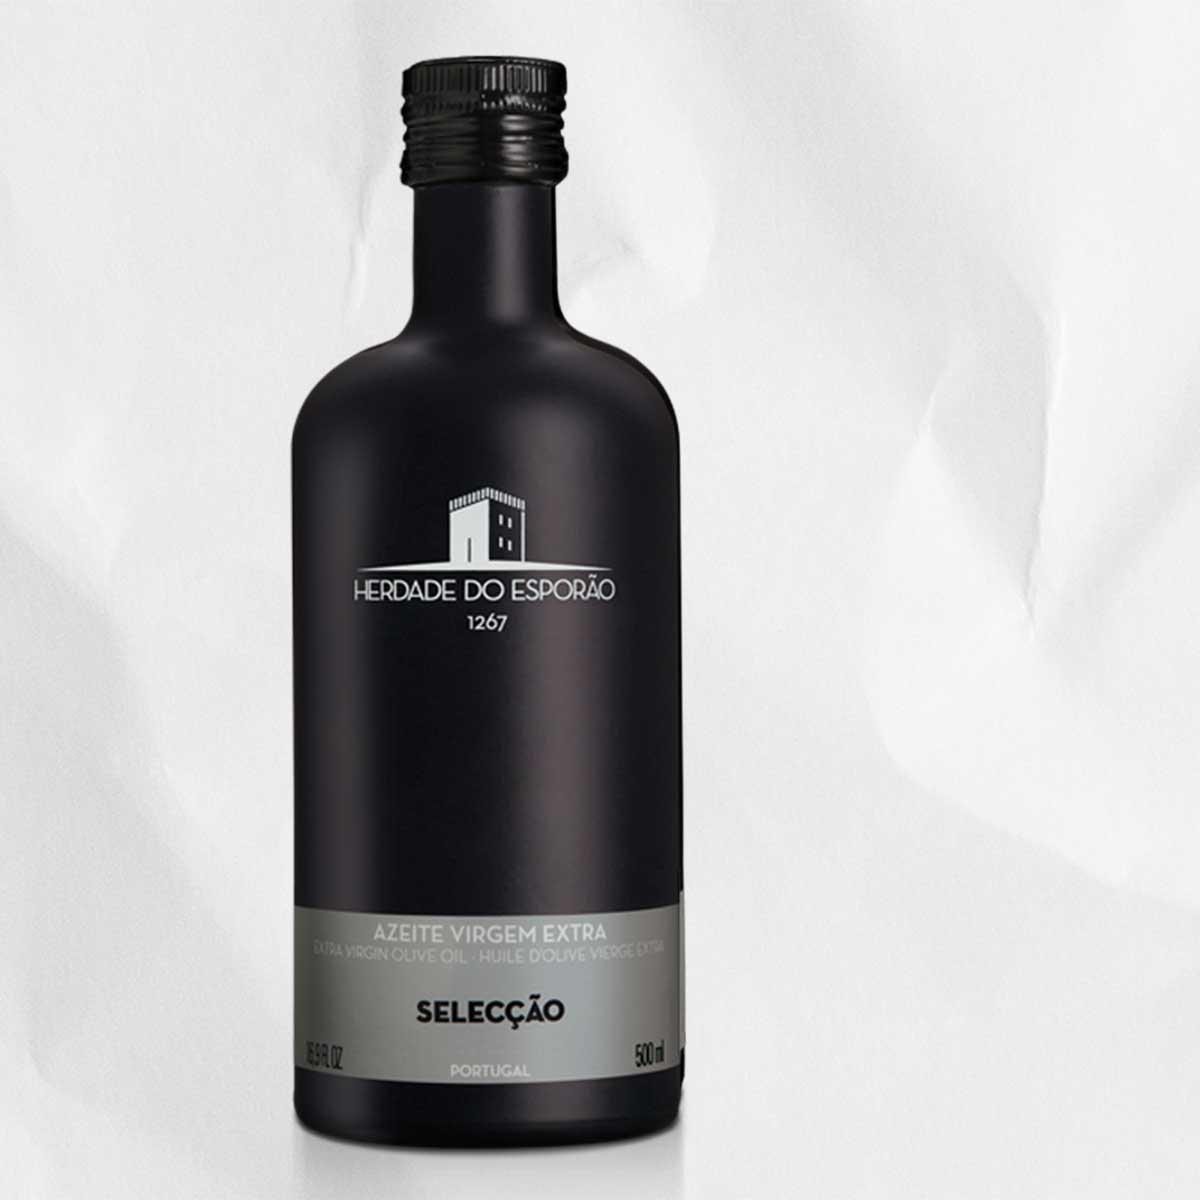 A bottle of Herdade do Seleccao Olive Oil